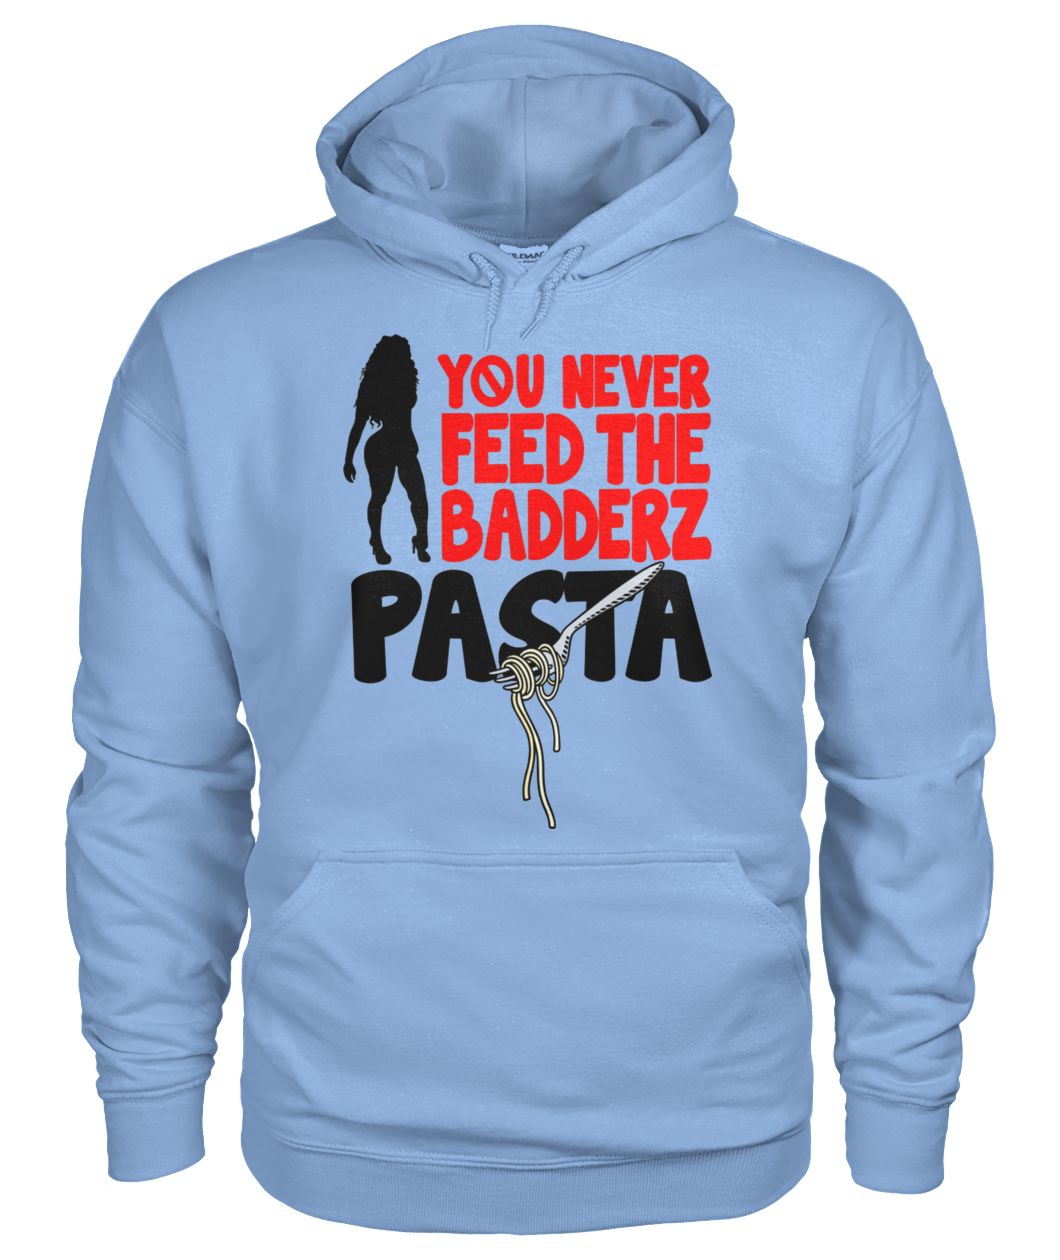 You never feed the badderz pasta gildan hoodie